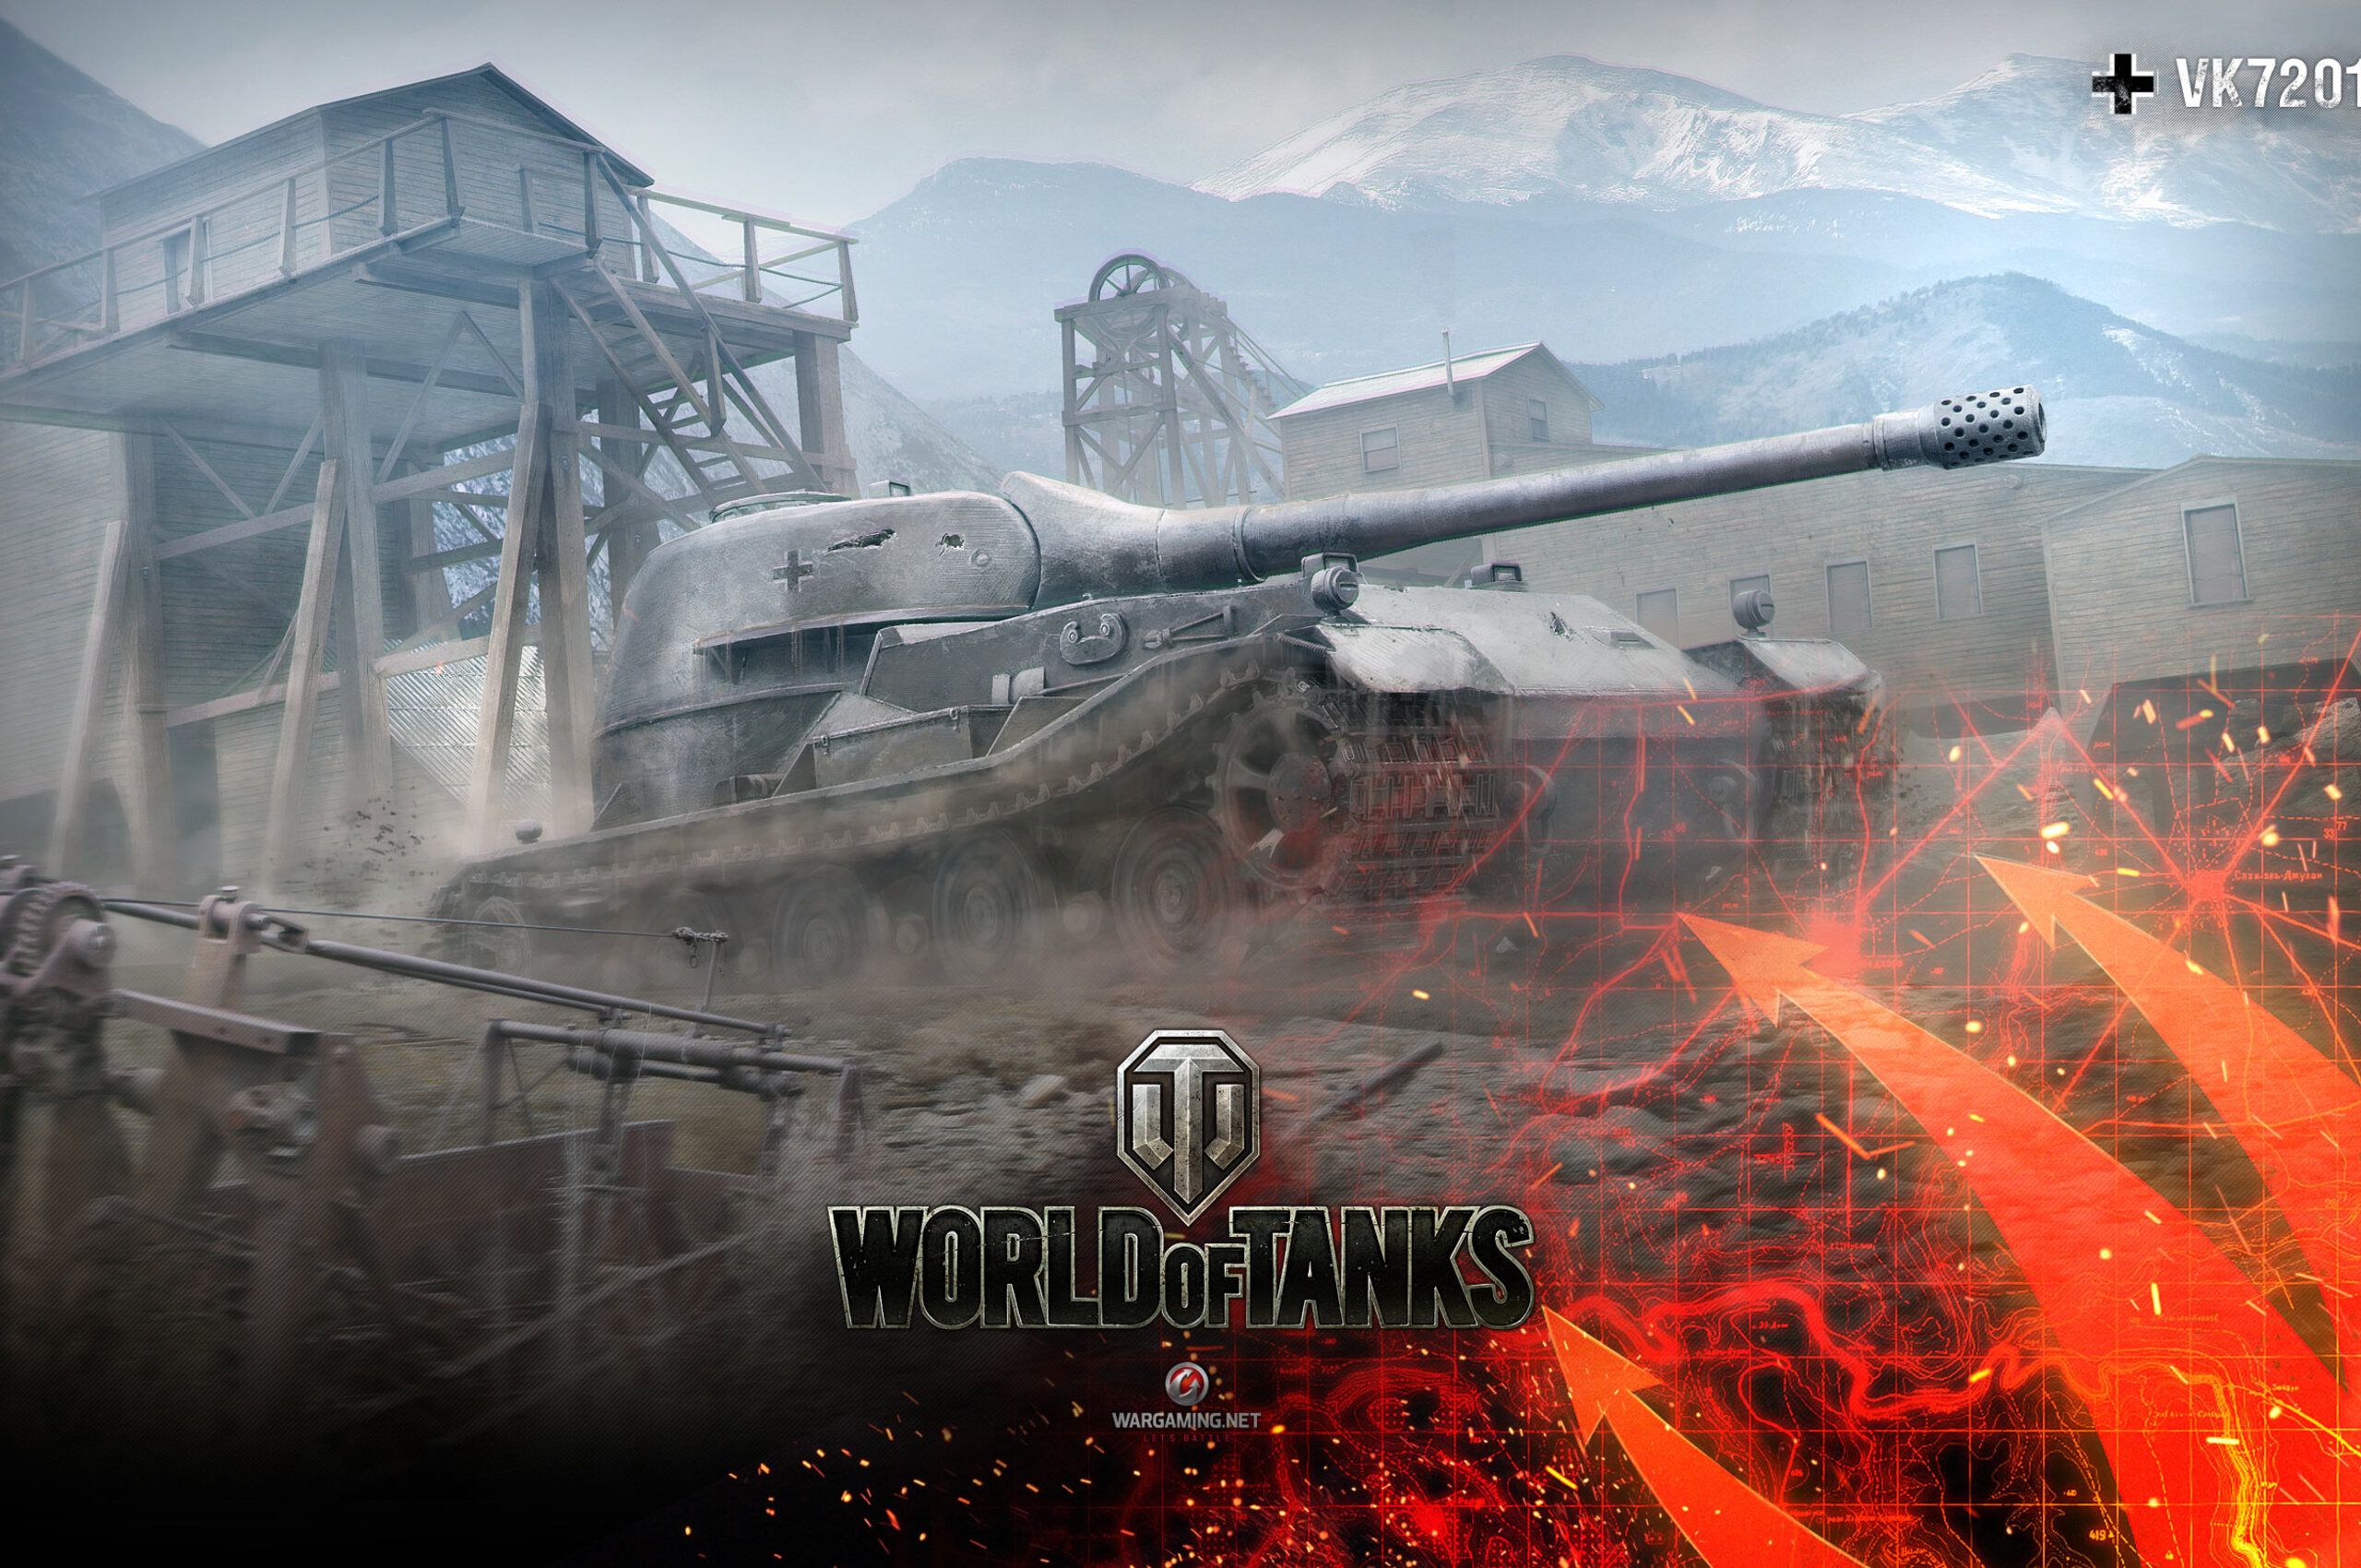 Https worldoftanks. Танк World of Tanks. World of Tanks Постер. Постеры танков World of Tanks. ВК 72.01 К вот блиц.